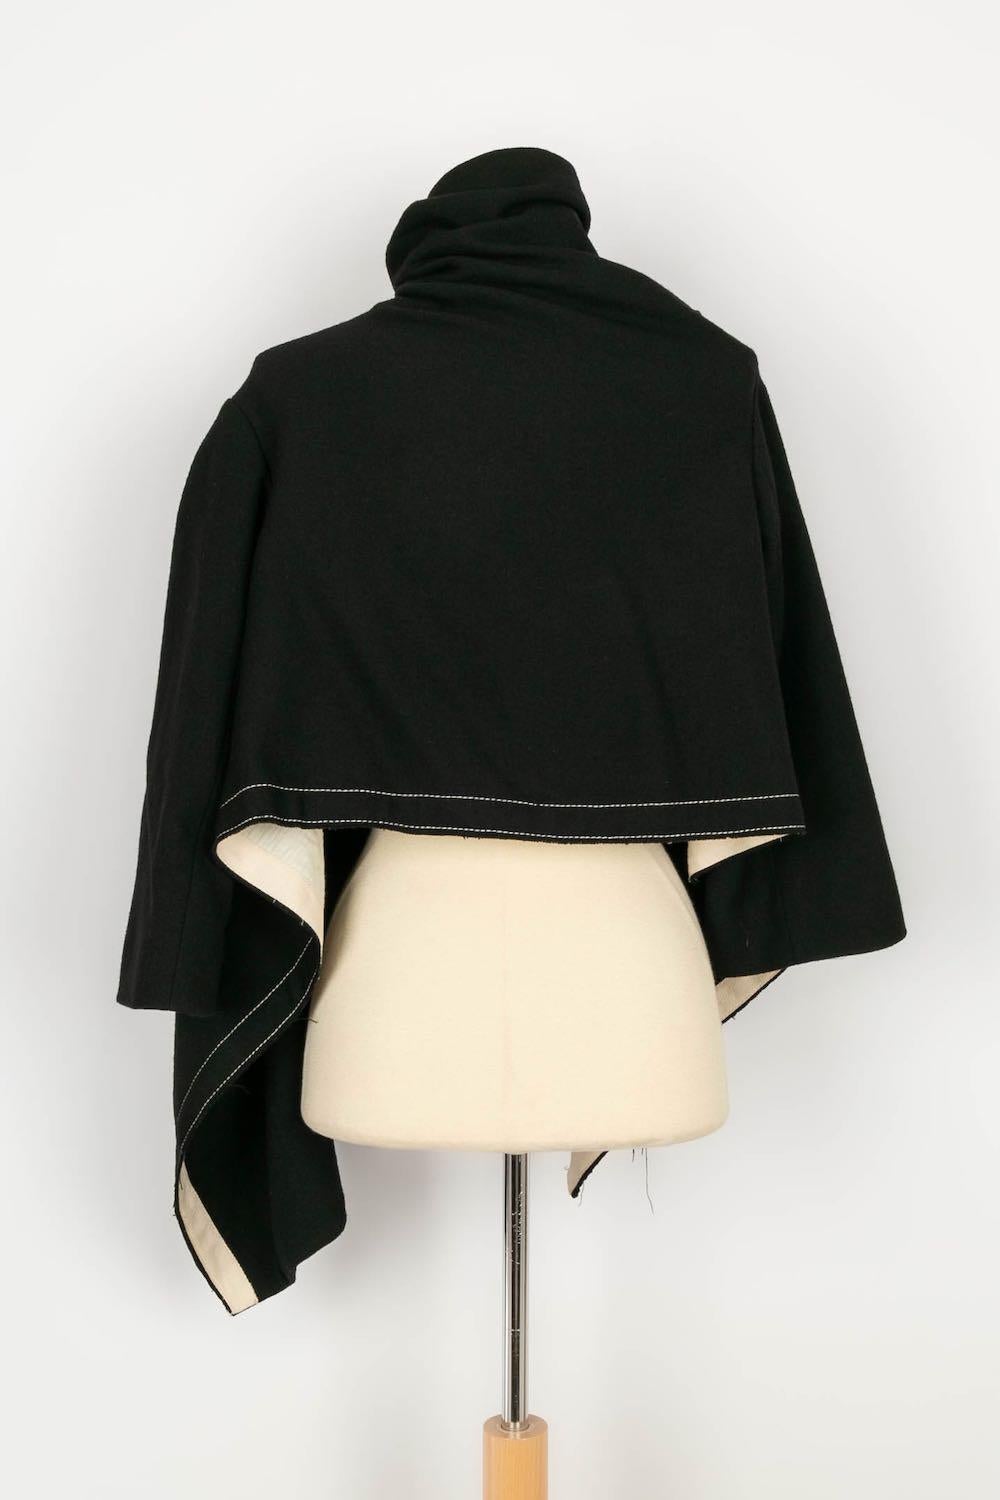 Peachoo + Krejberg Jacket in Black Wool and Beige Canvas, 2008-2009 In Excellent Condition For Sale In SAINT-OUEN-SUR-SEINE, FR